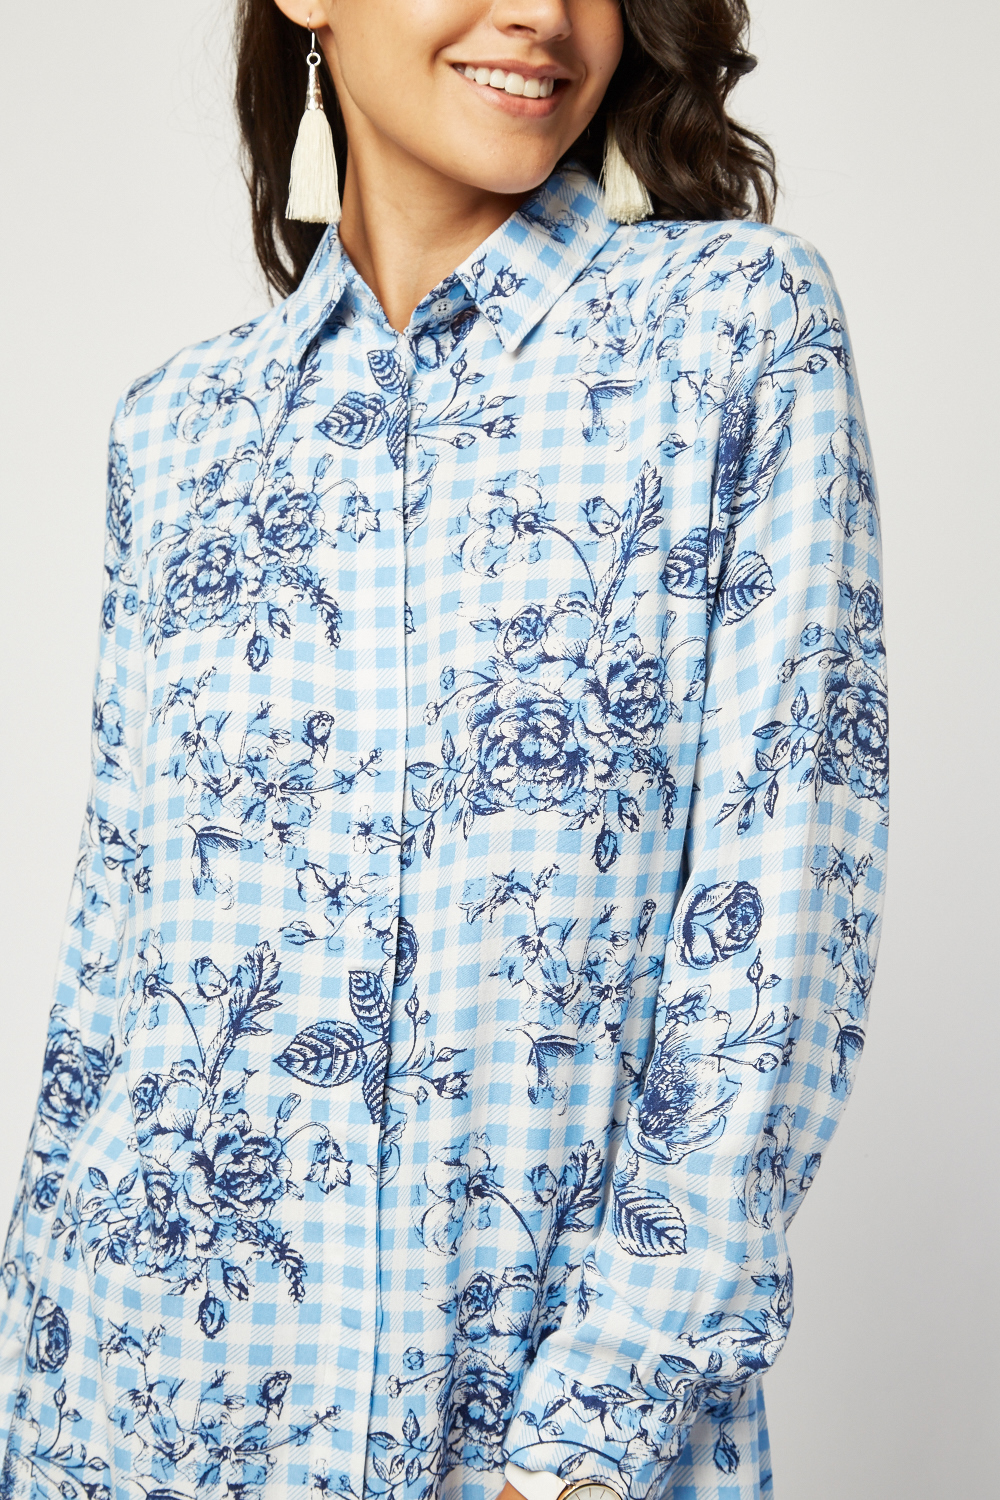 Gingham Floral Print Shirt Dress - Just $7